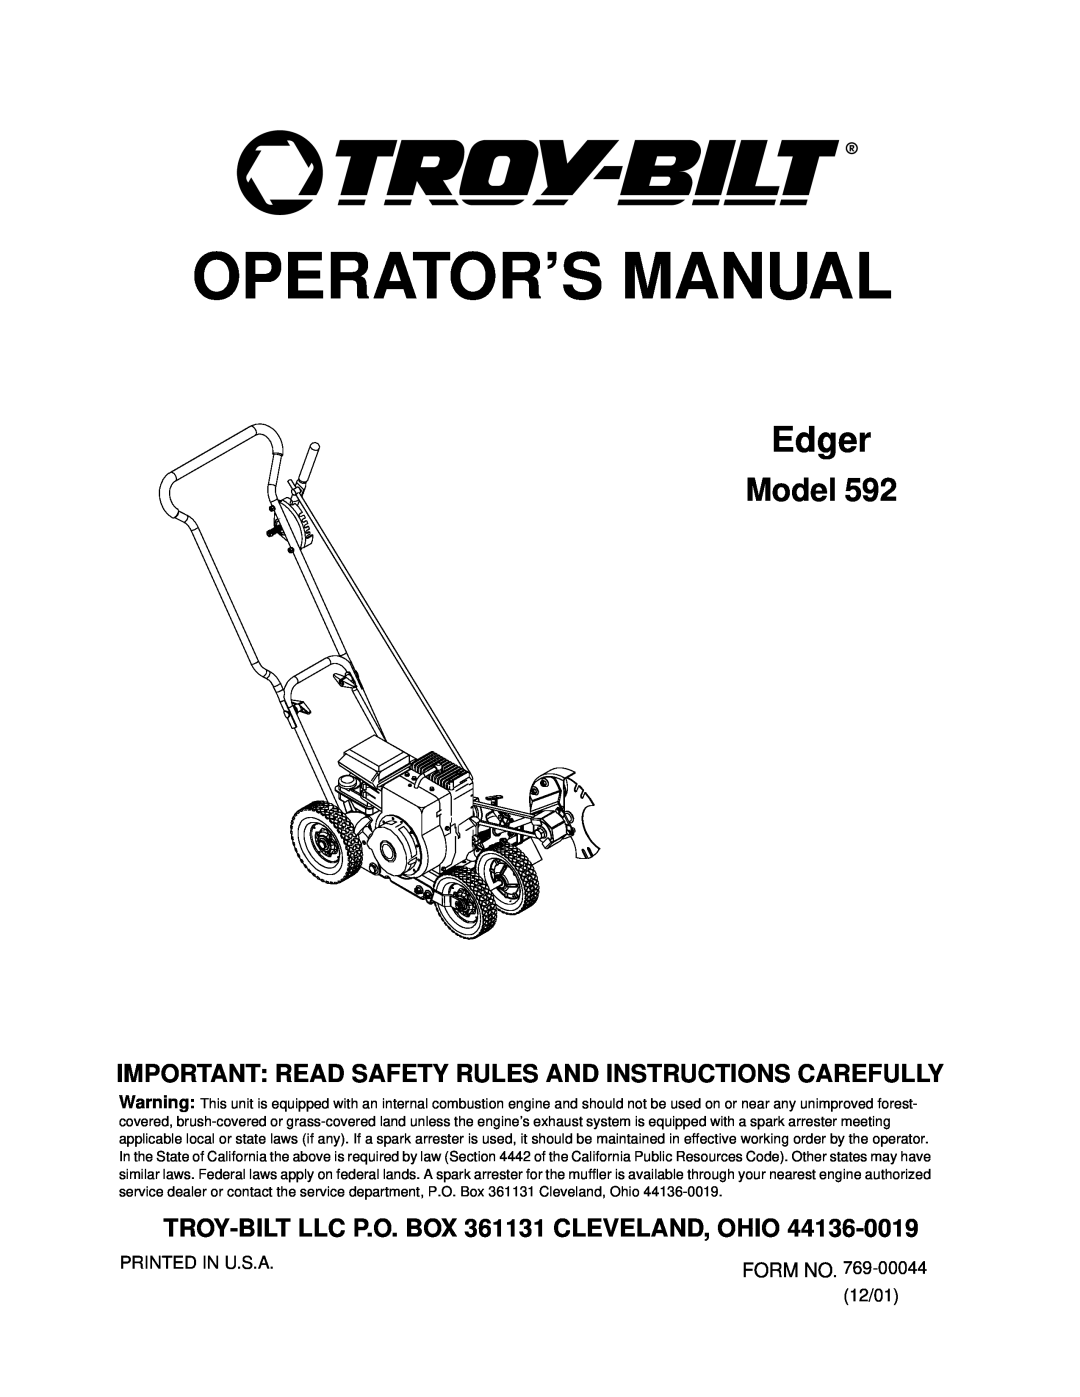 Briggs & Stratton 592 manual Model, Operator’S Manual, Edger, TROY-BILTLLC P.O. BOX 361131 CLEVELAND, OHIO 